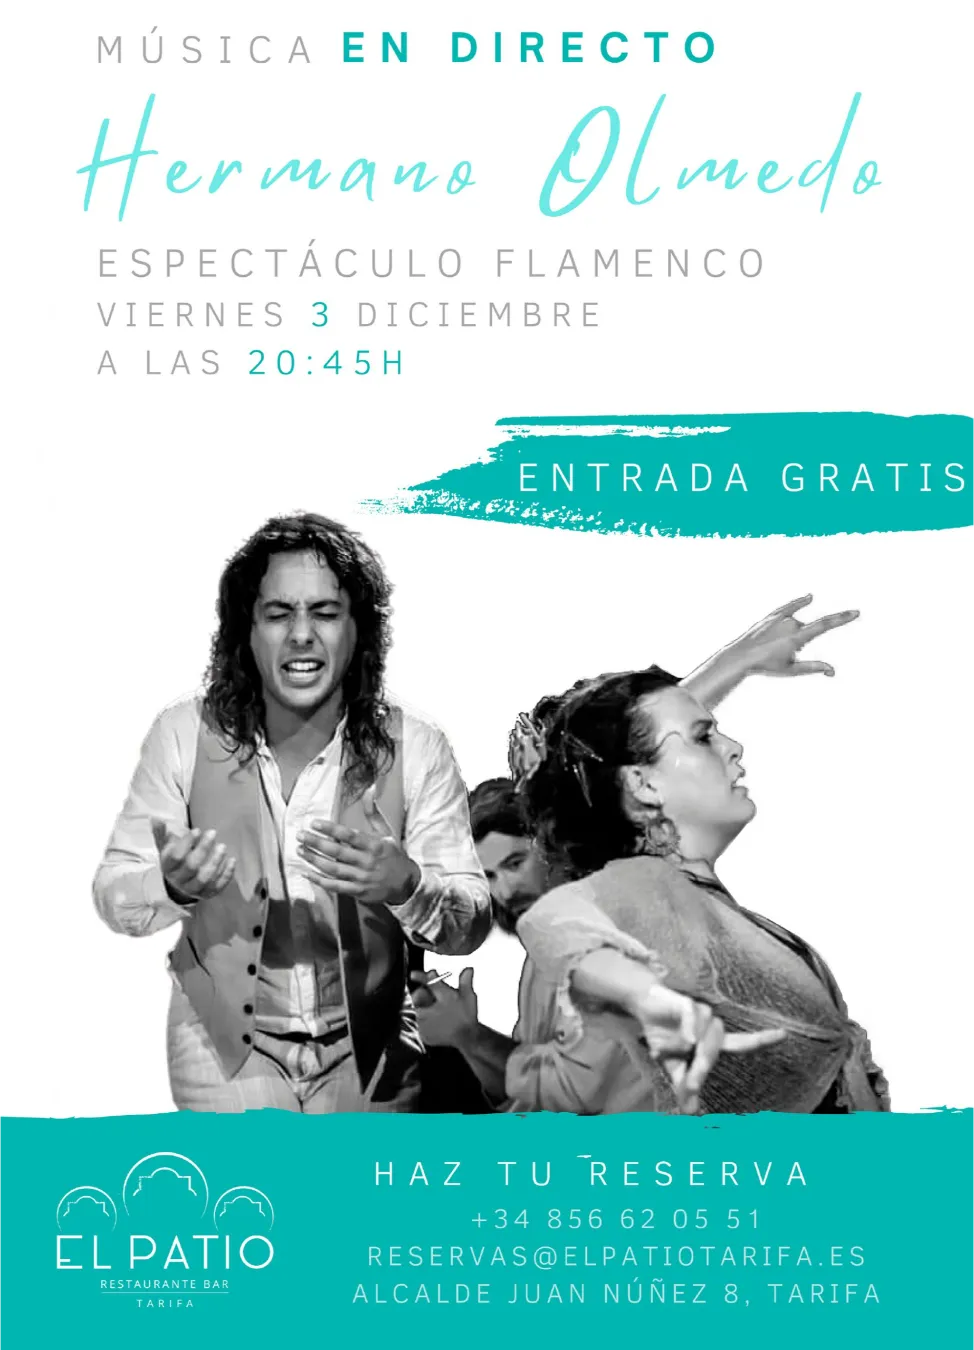 Música flamenca en directo en Tarifa